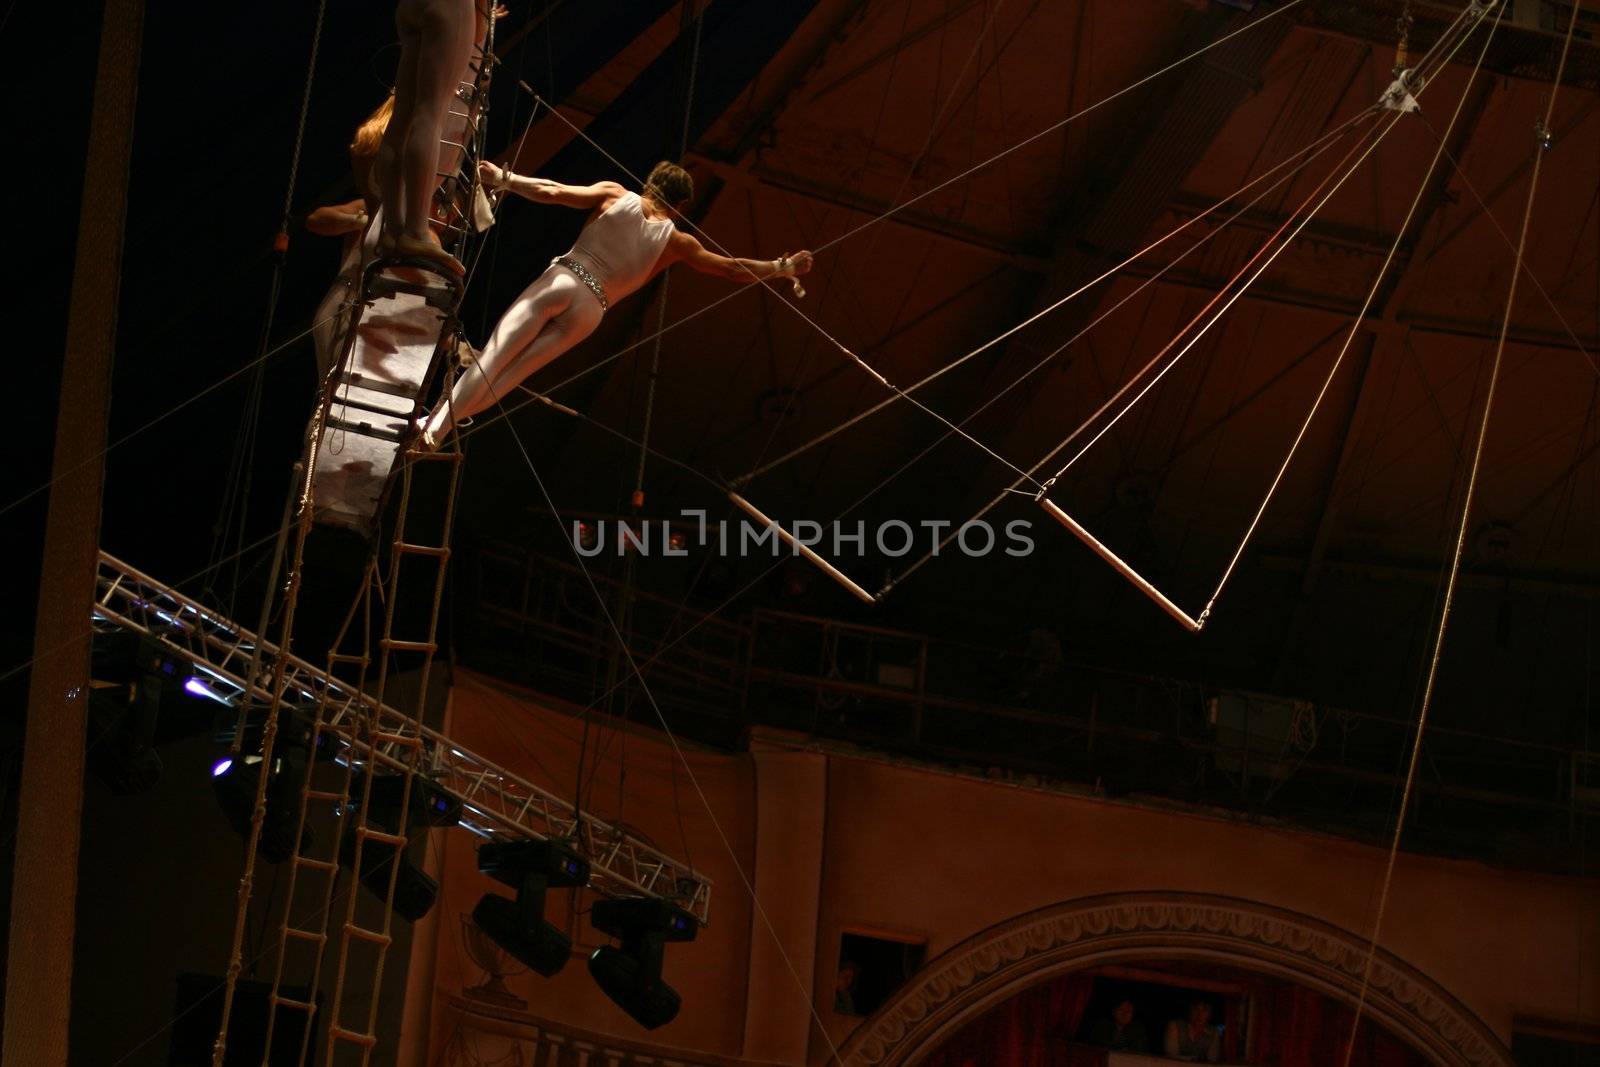 Acrobat in circus life risk man